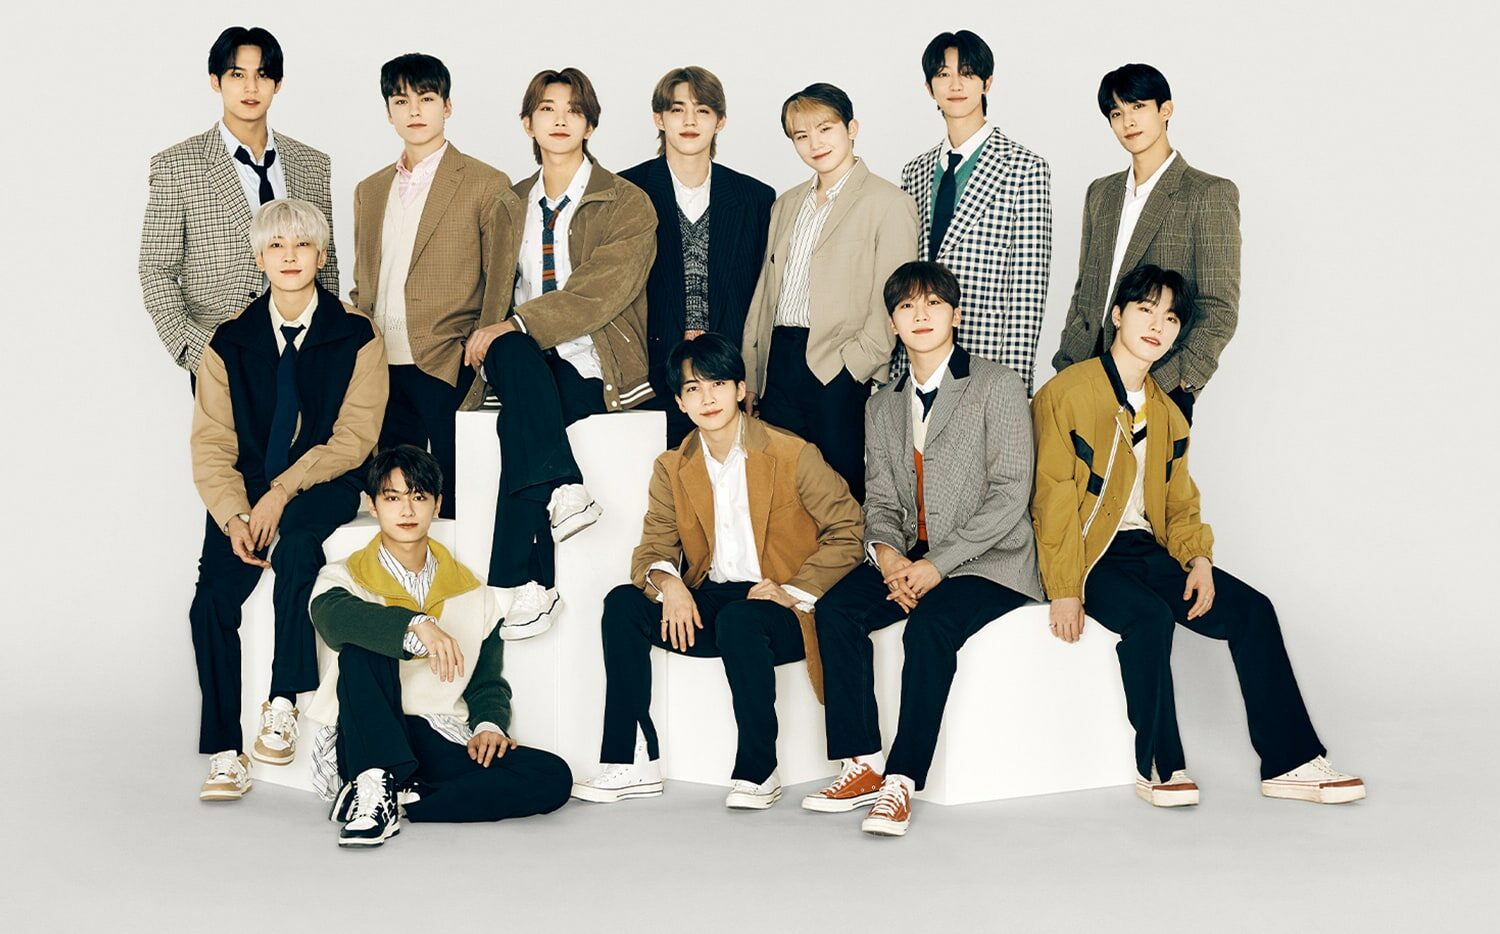 Group photo of the Korean pop group Seventeen